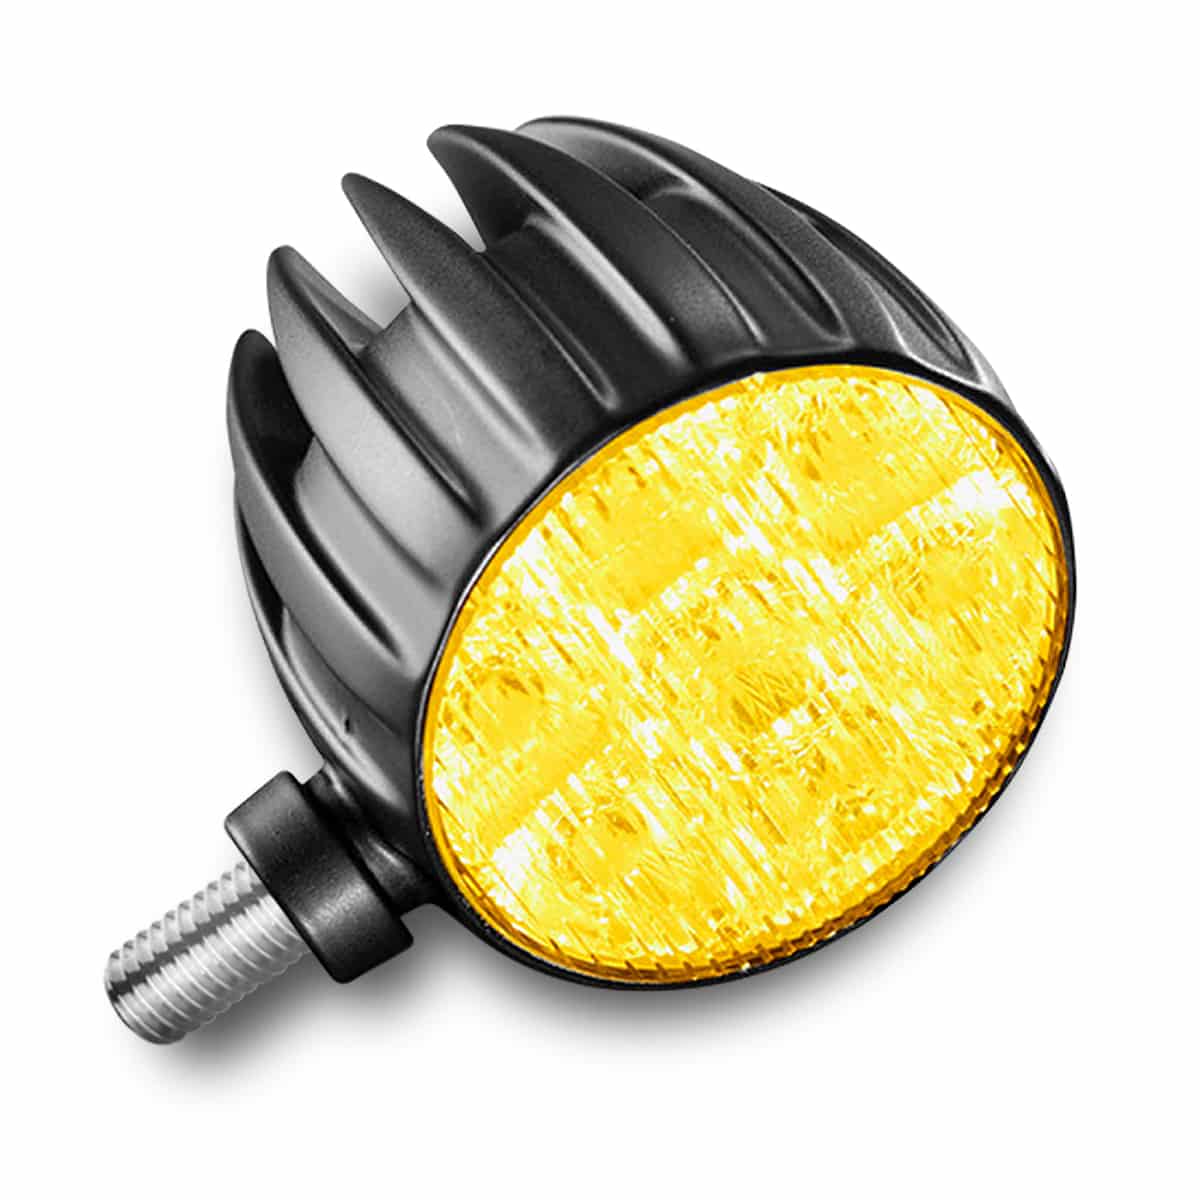 Motoradblinker | Motoradbeleuchtung | LED | 3 in 1